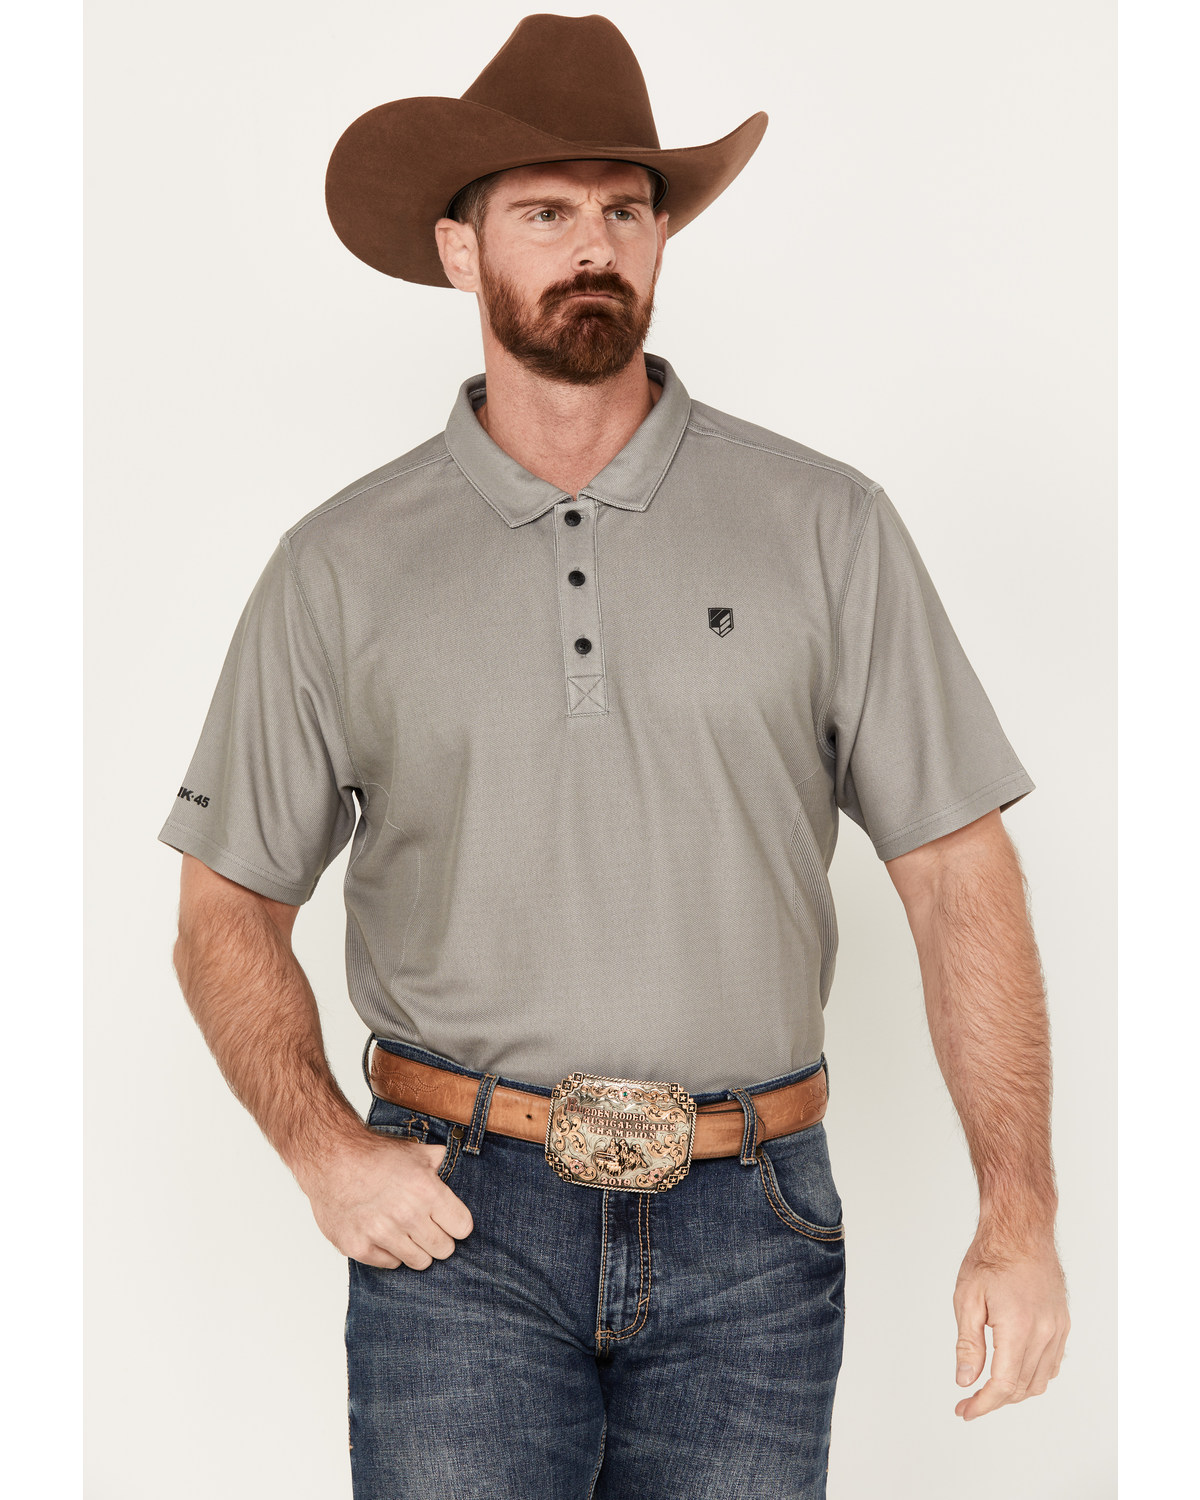 RANK 45® Men's Engineer Short Sleeve Polo Shirt